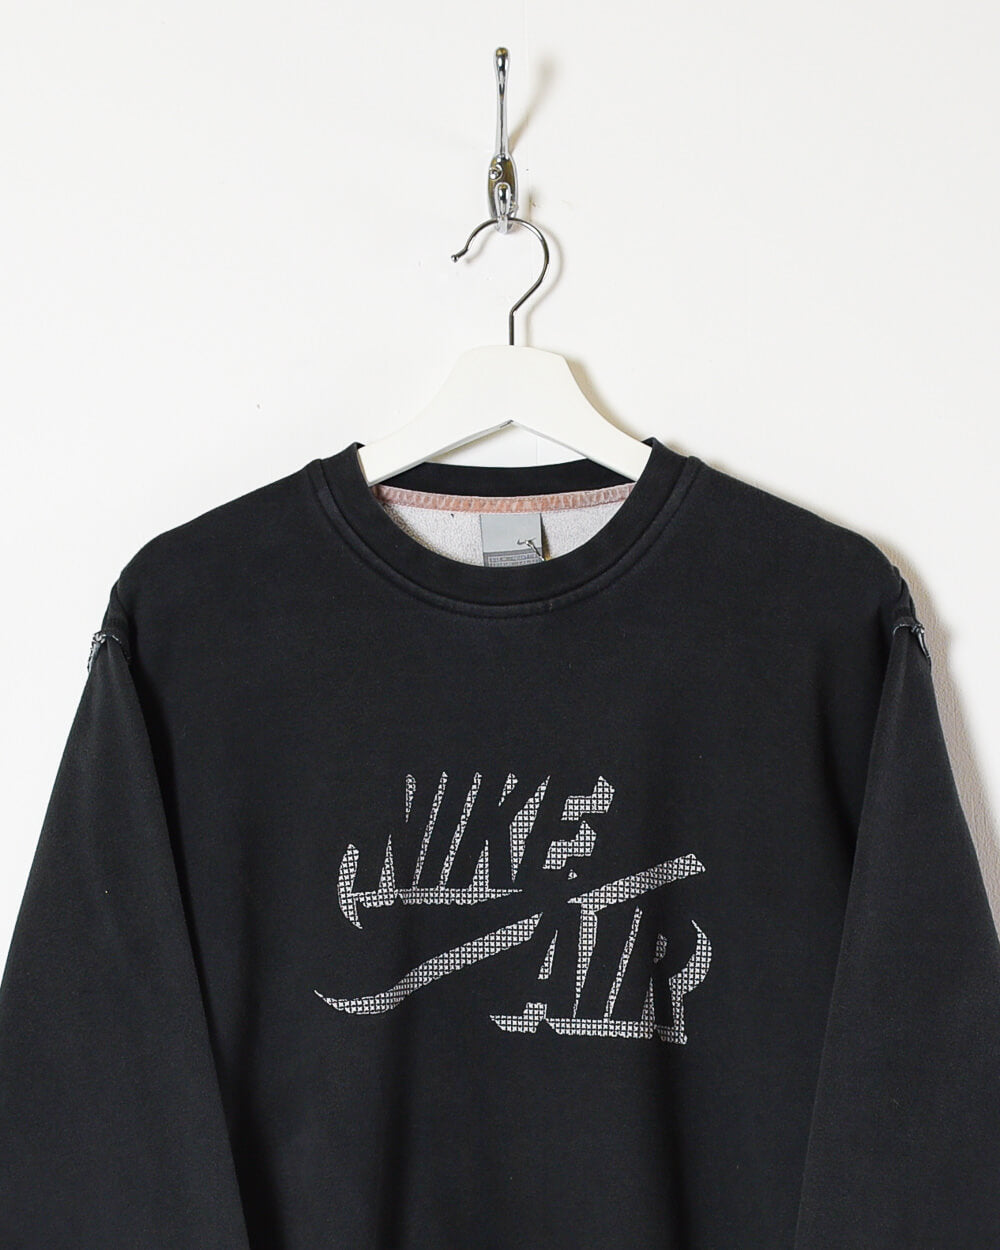 Black Nike Air Sweatshirt - Medium